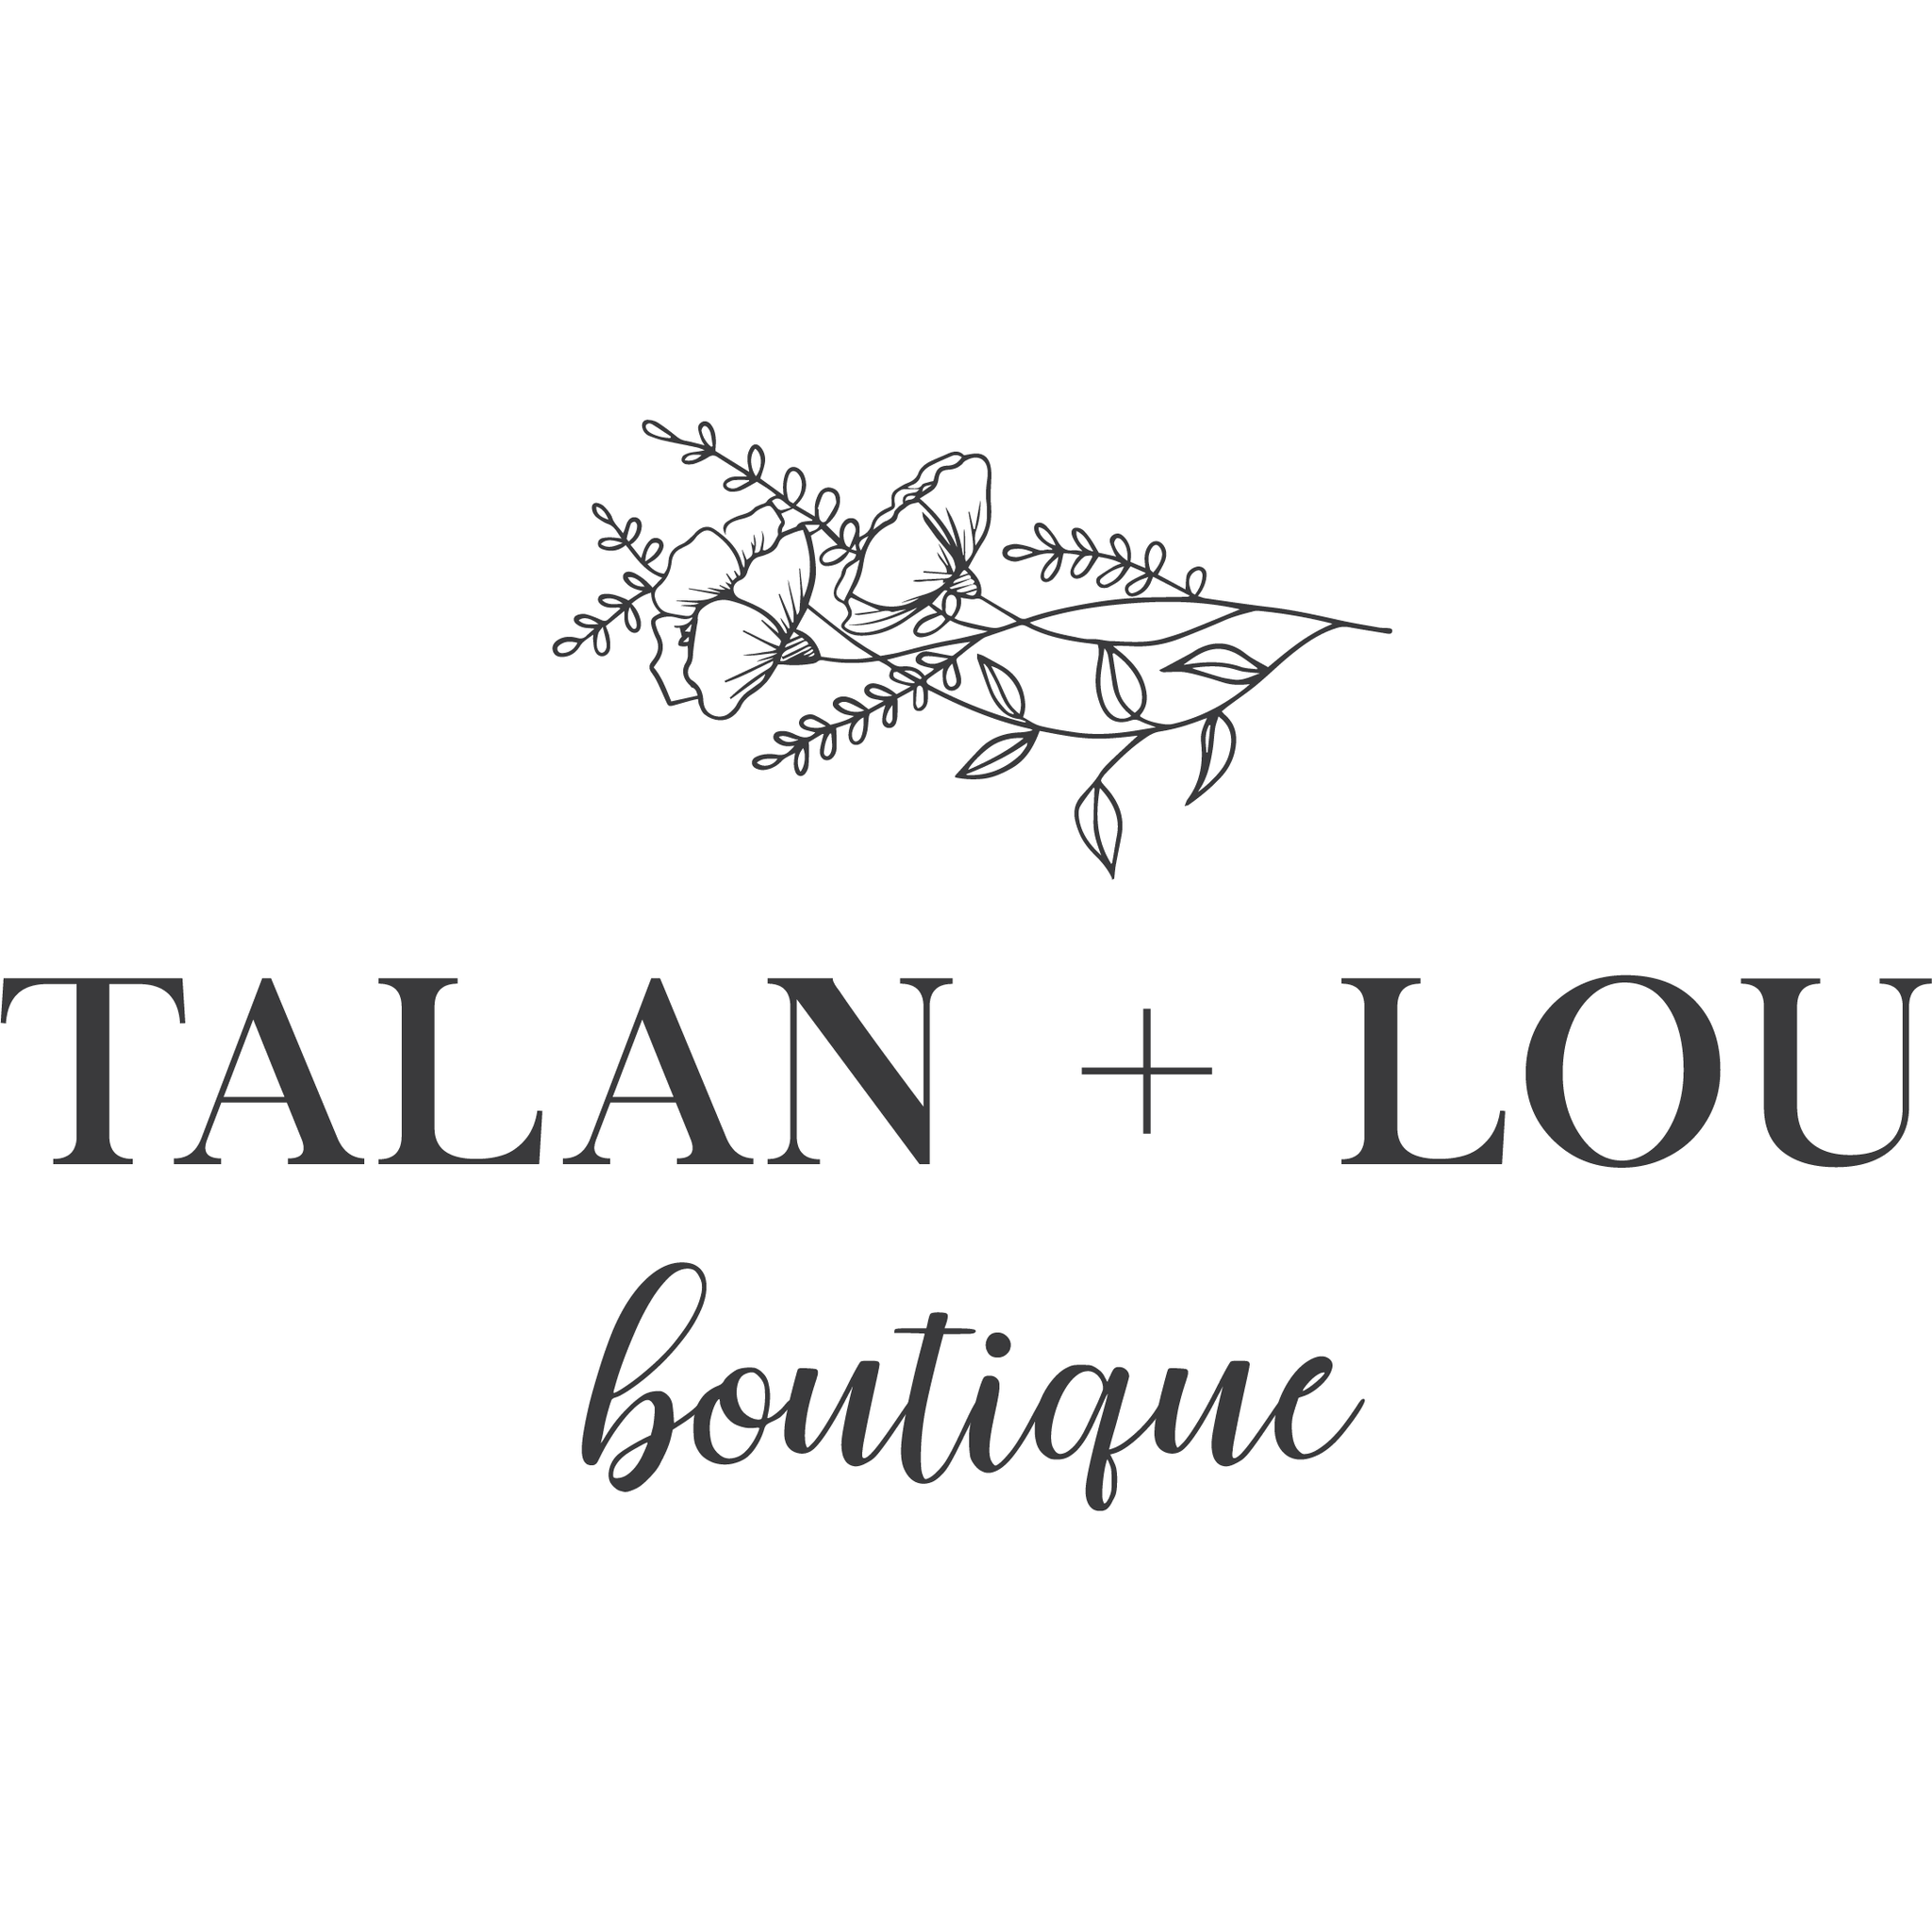 Talan+Lou Boutique Gift card